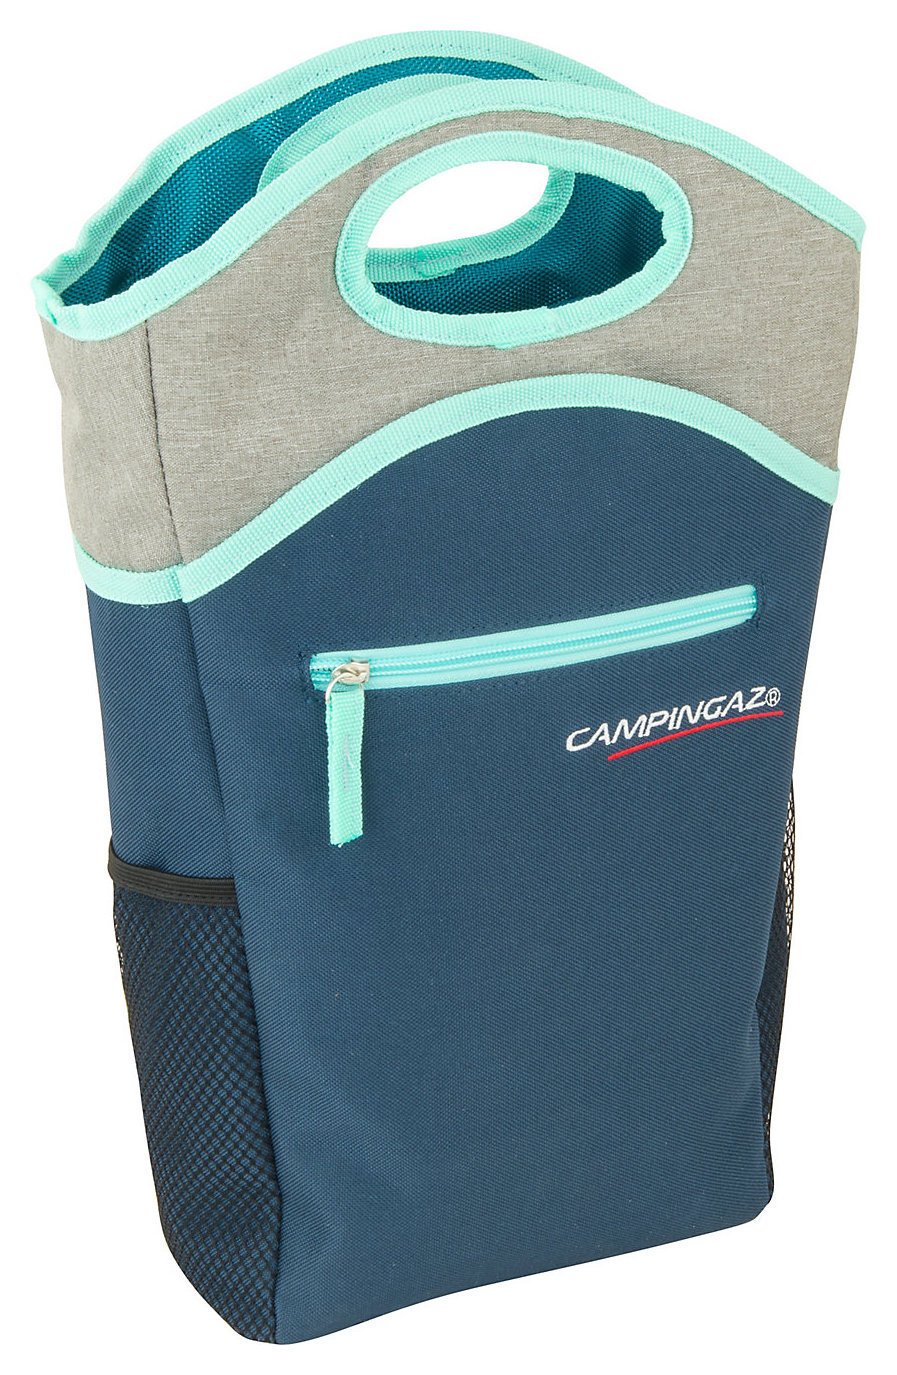 Campingaz 2 Bottle Wine Cooler Bag review